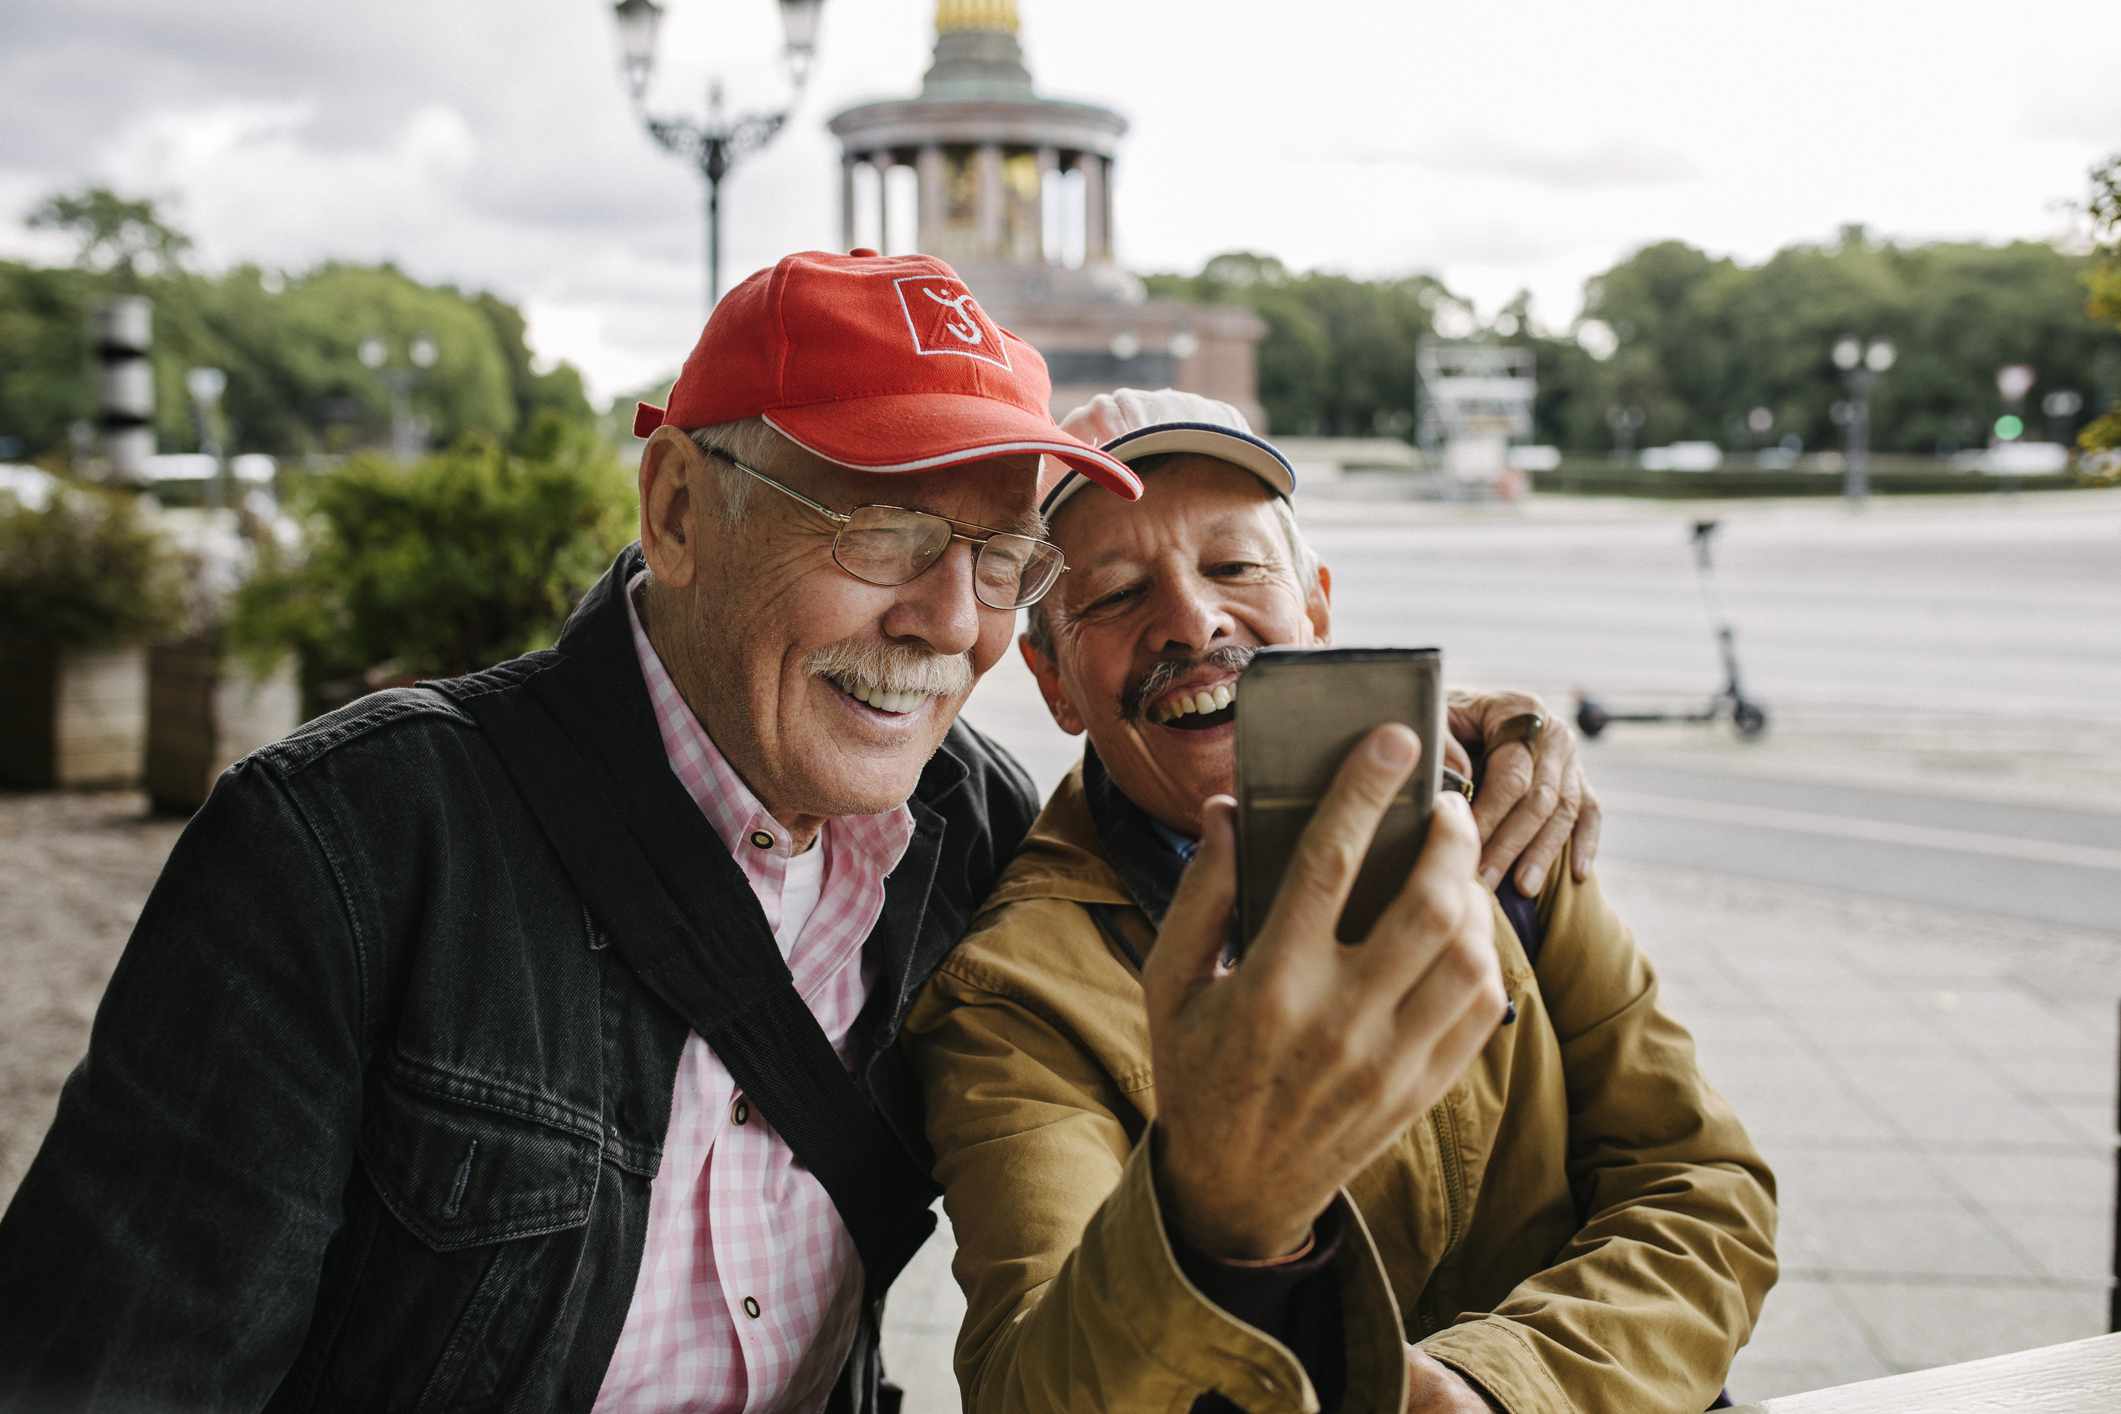 Two older men taking a photo together